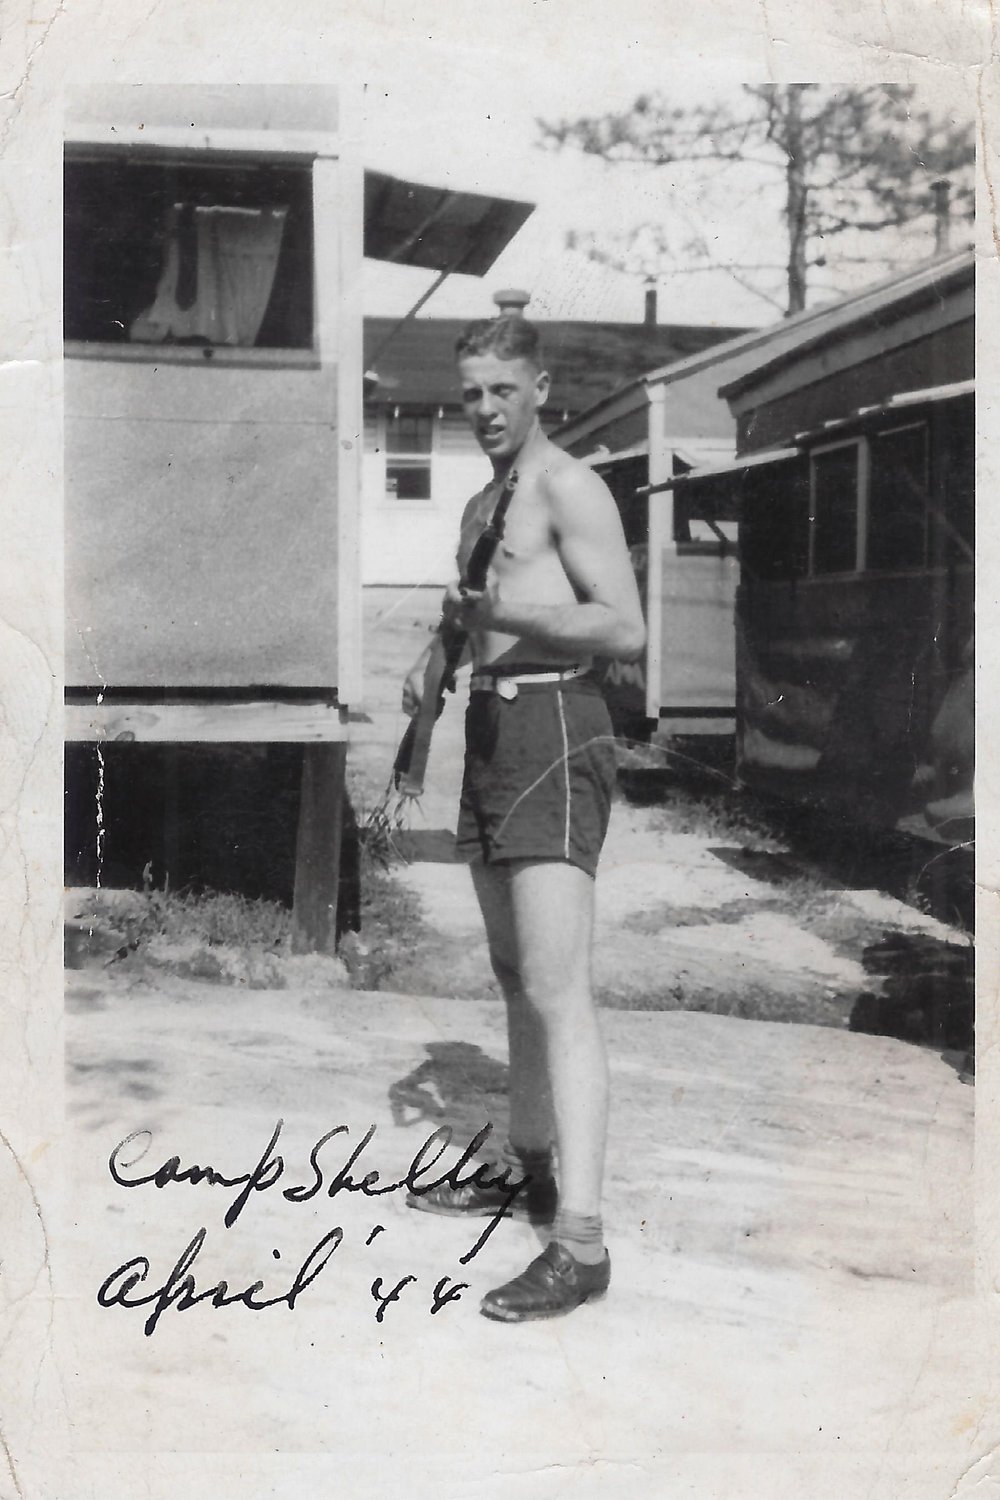 Dad Camp Shelby February 1944.jpg